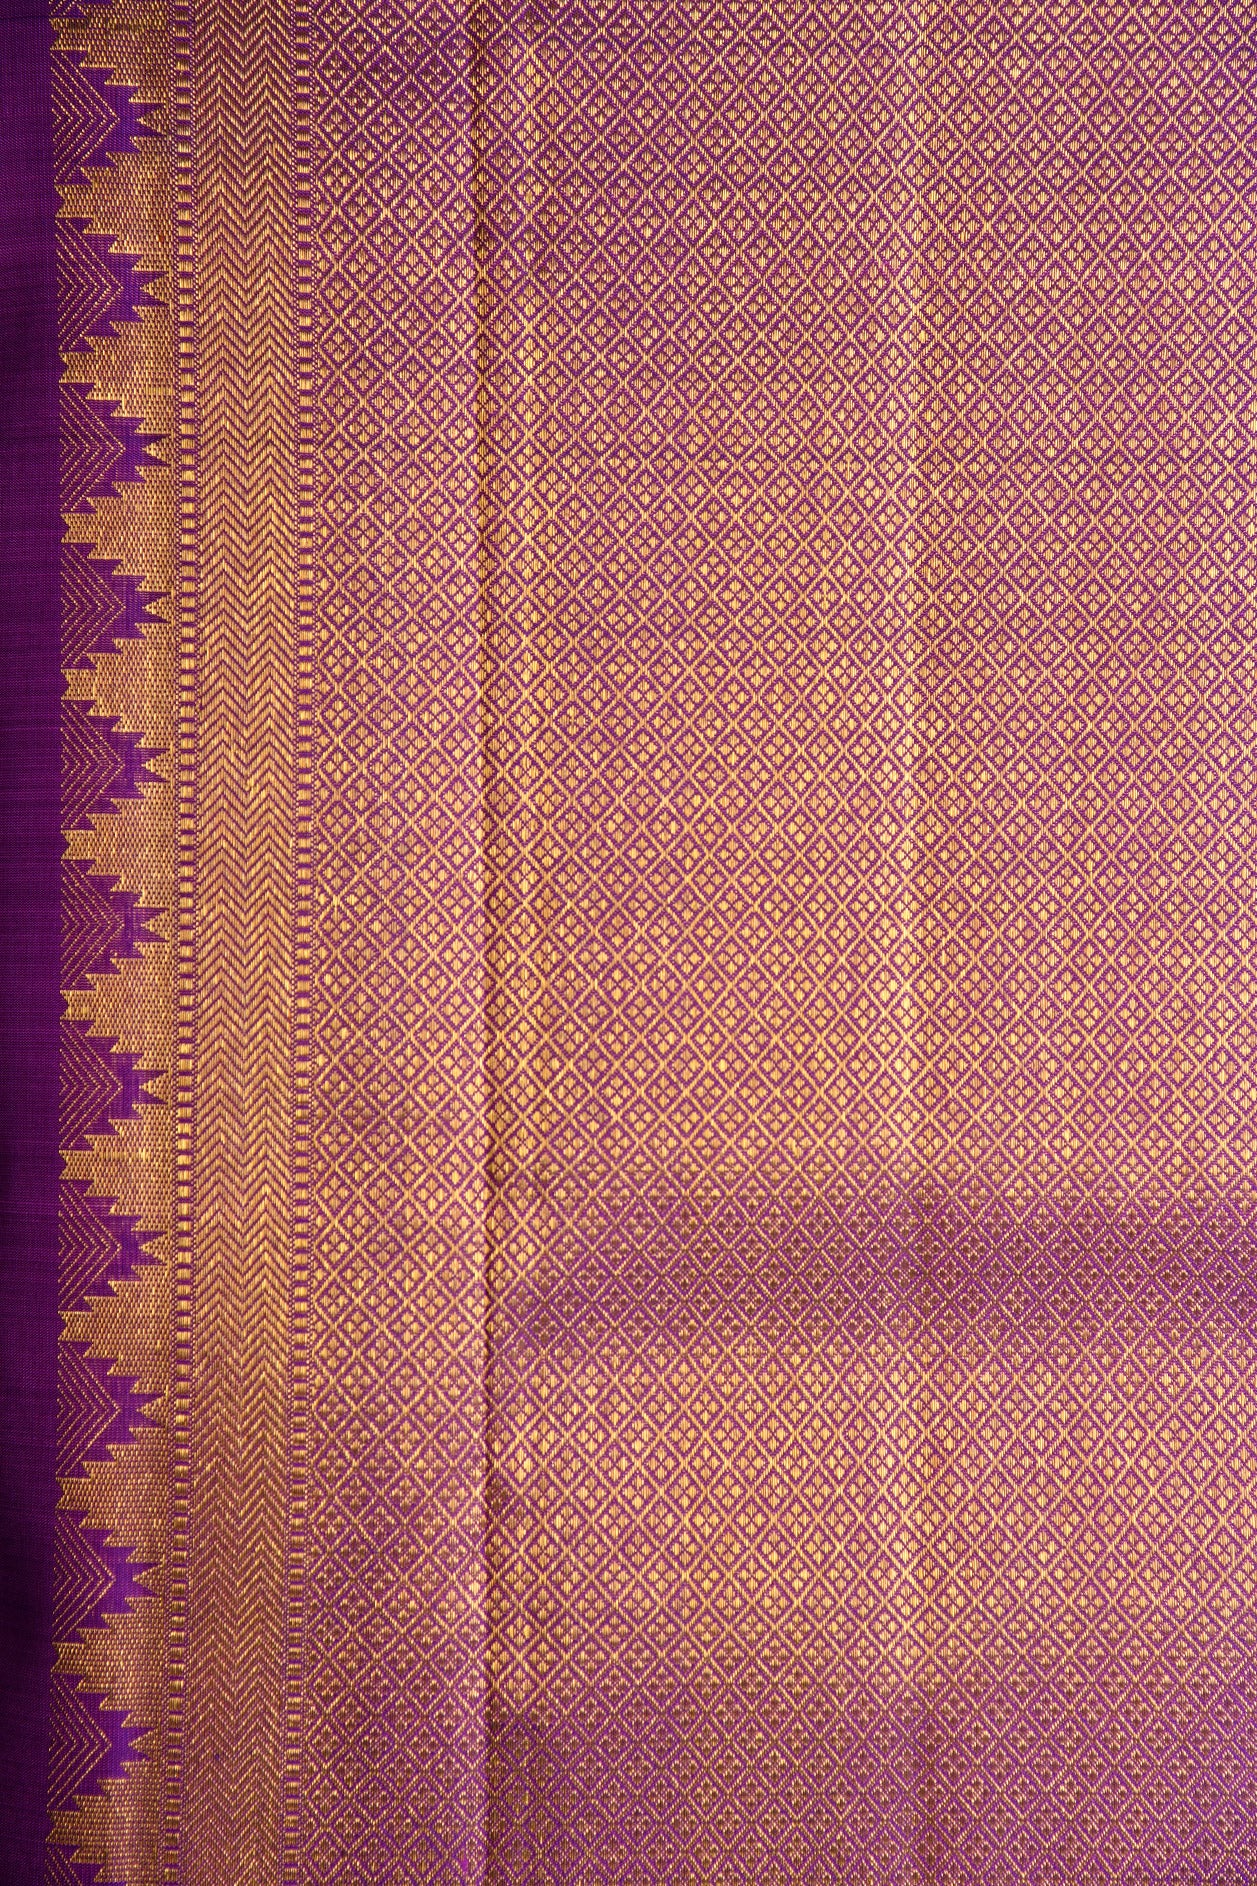 Brocade Peacock Motif Purple Kanchipuram Silk Saree